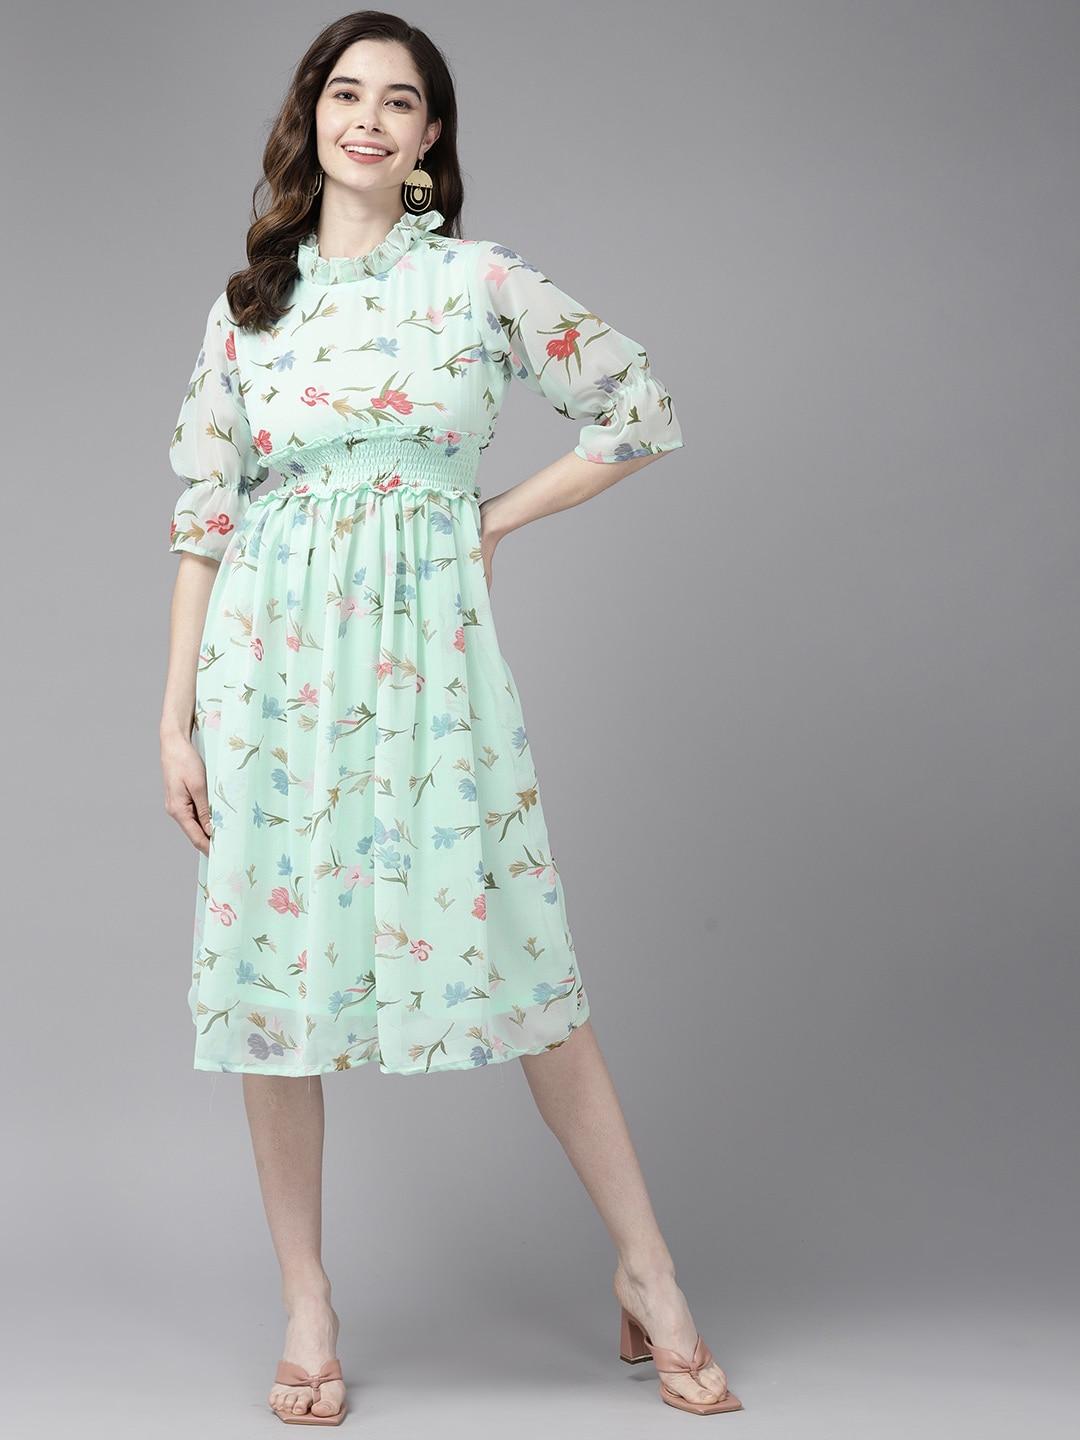 aarika-floral-georgette-empire-midi-dress